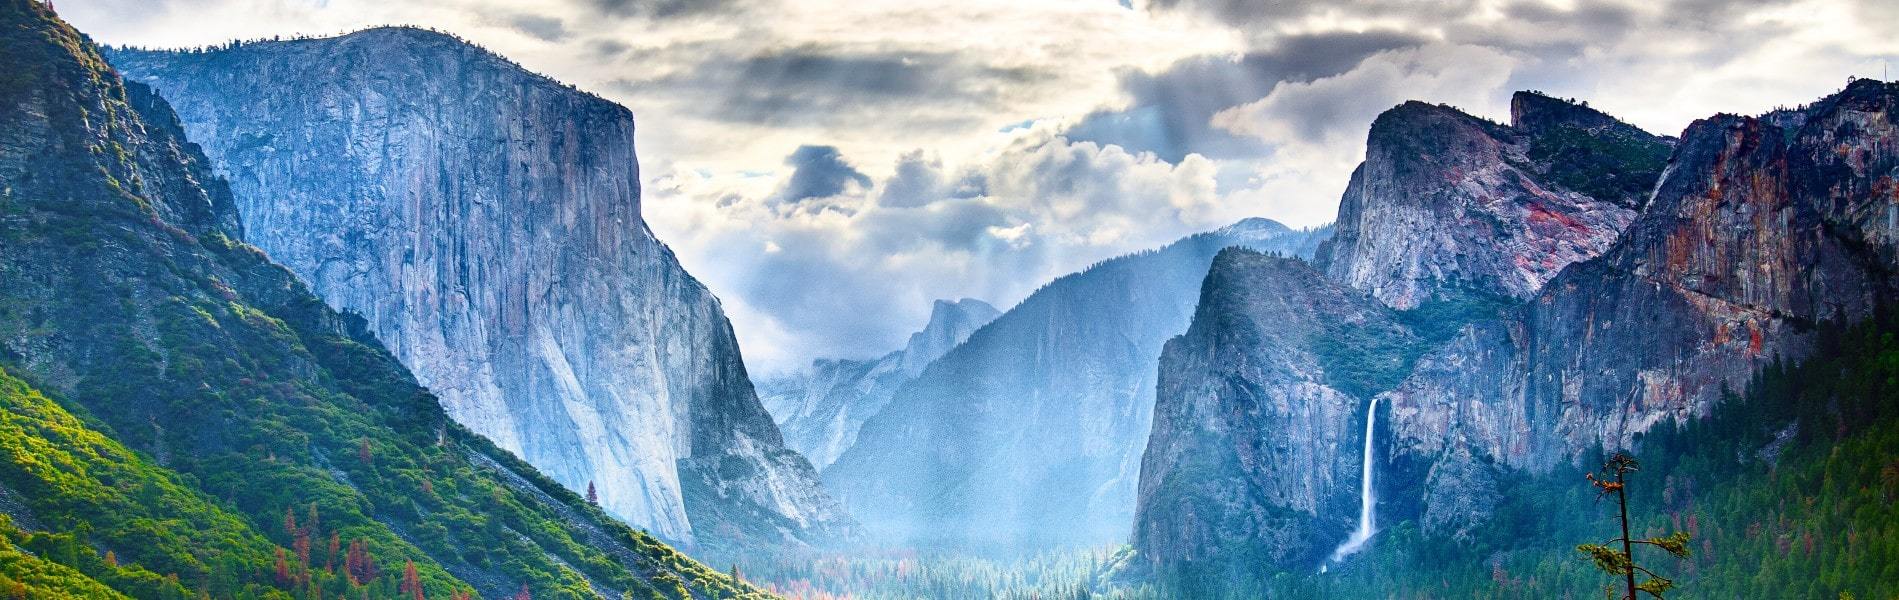 Incredible view of Yosemite National Park